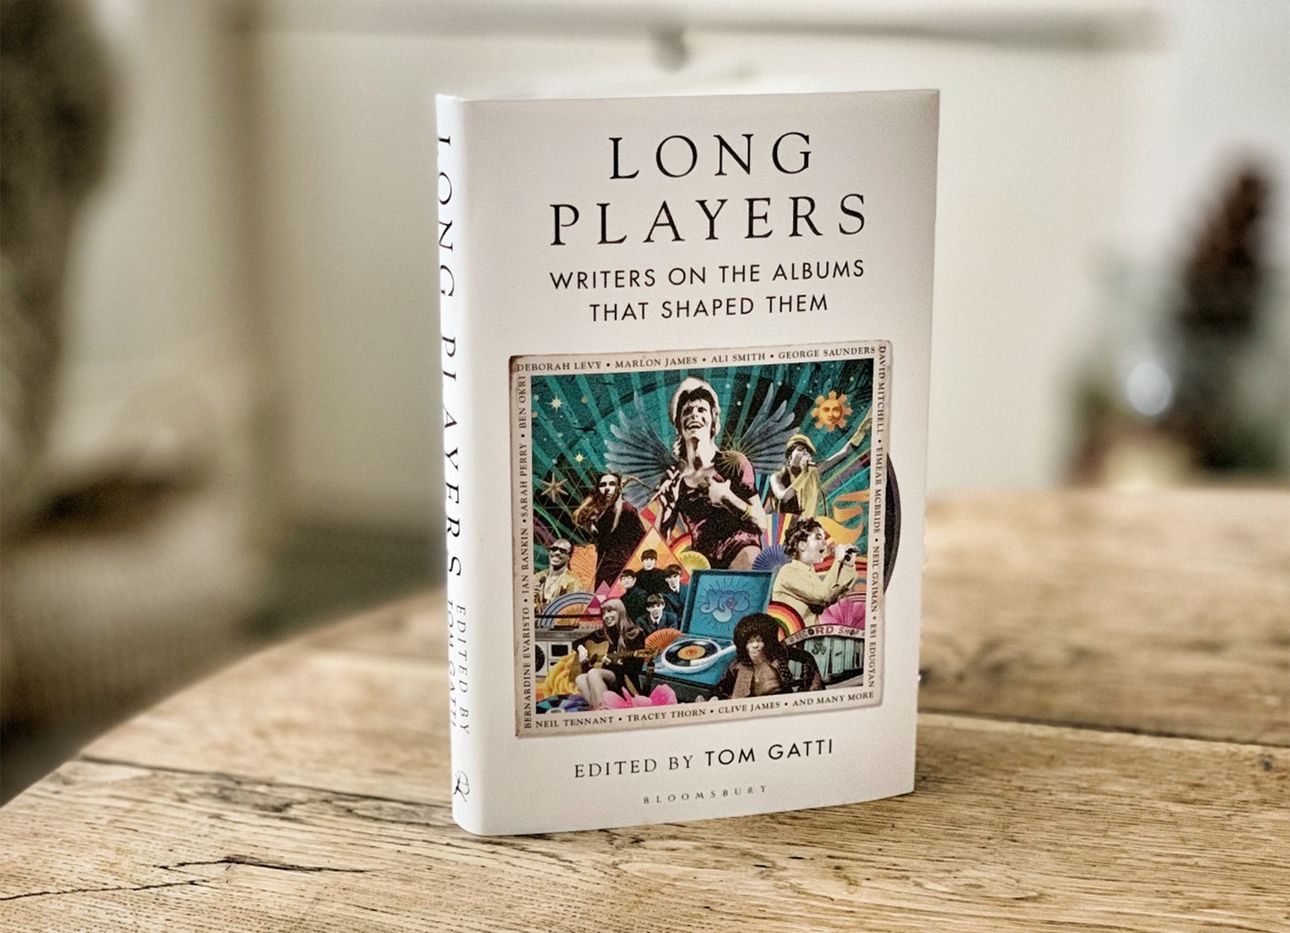 Long Players book by Tom Gatti